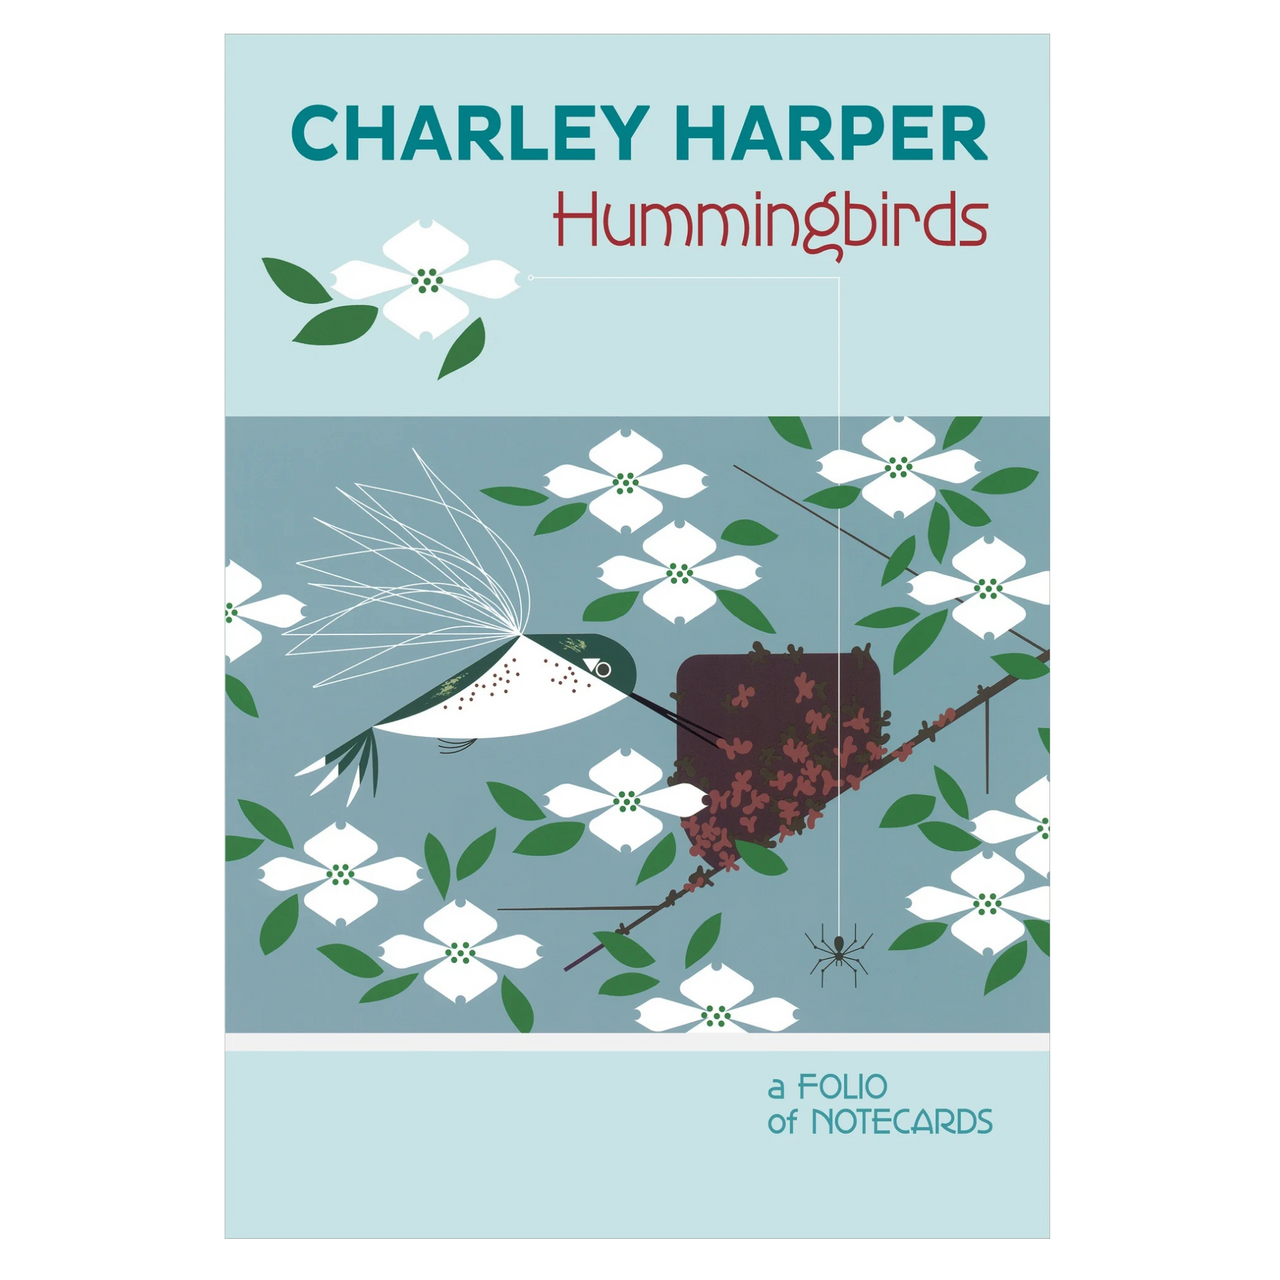 Pomegranate: Charley Harper "Hummingbirds" folio notecards